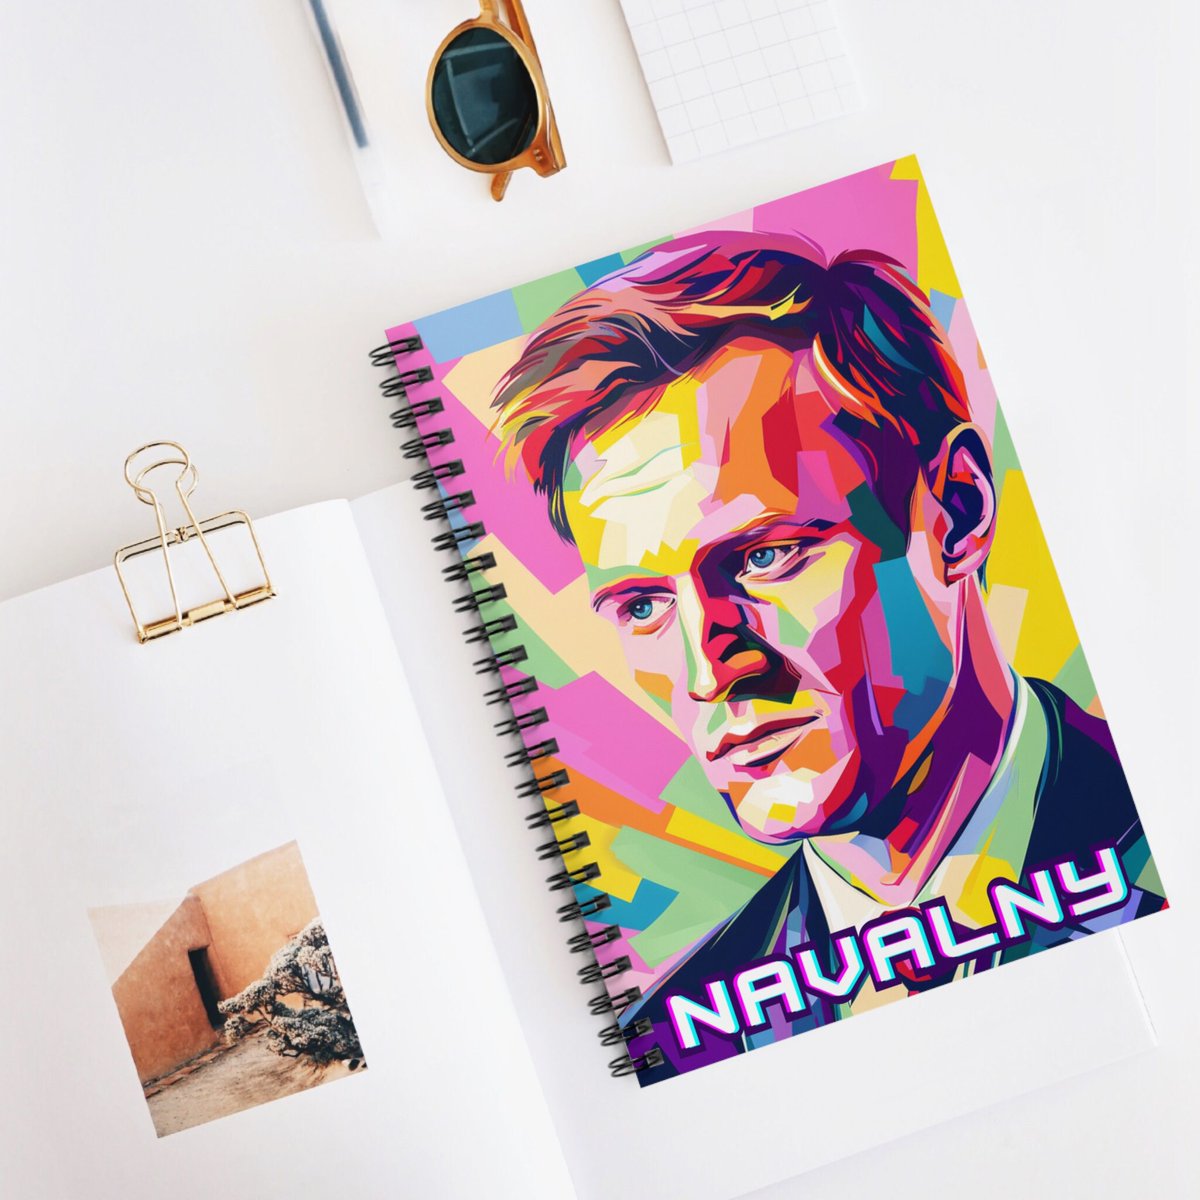 Alexei Navalny Spiral Notebook - Ruled Line, pop art style portrait tuppu.net/4f7b1579 #GiftIdeas #Artwork #GreetingCards #Politics